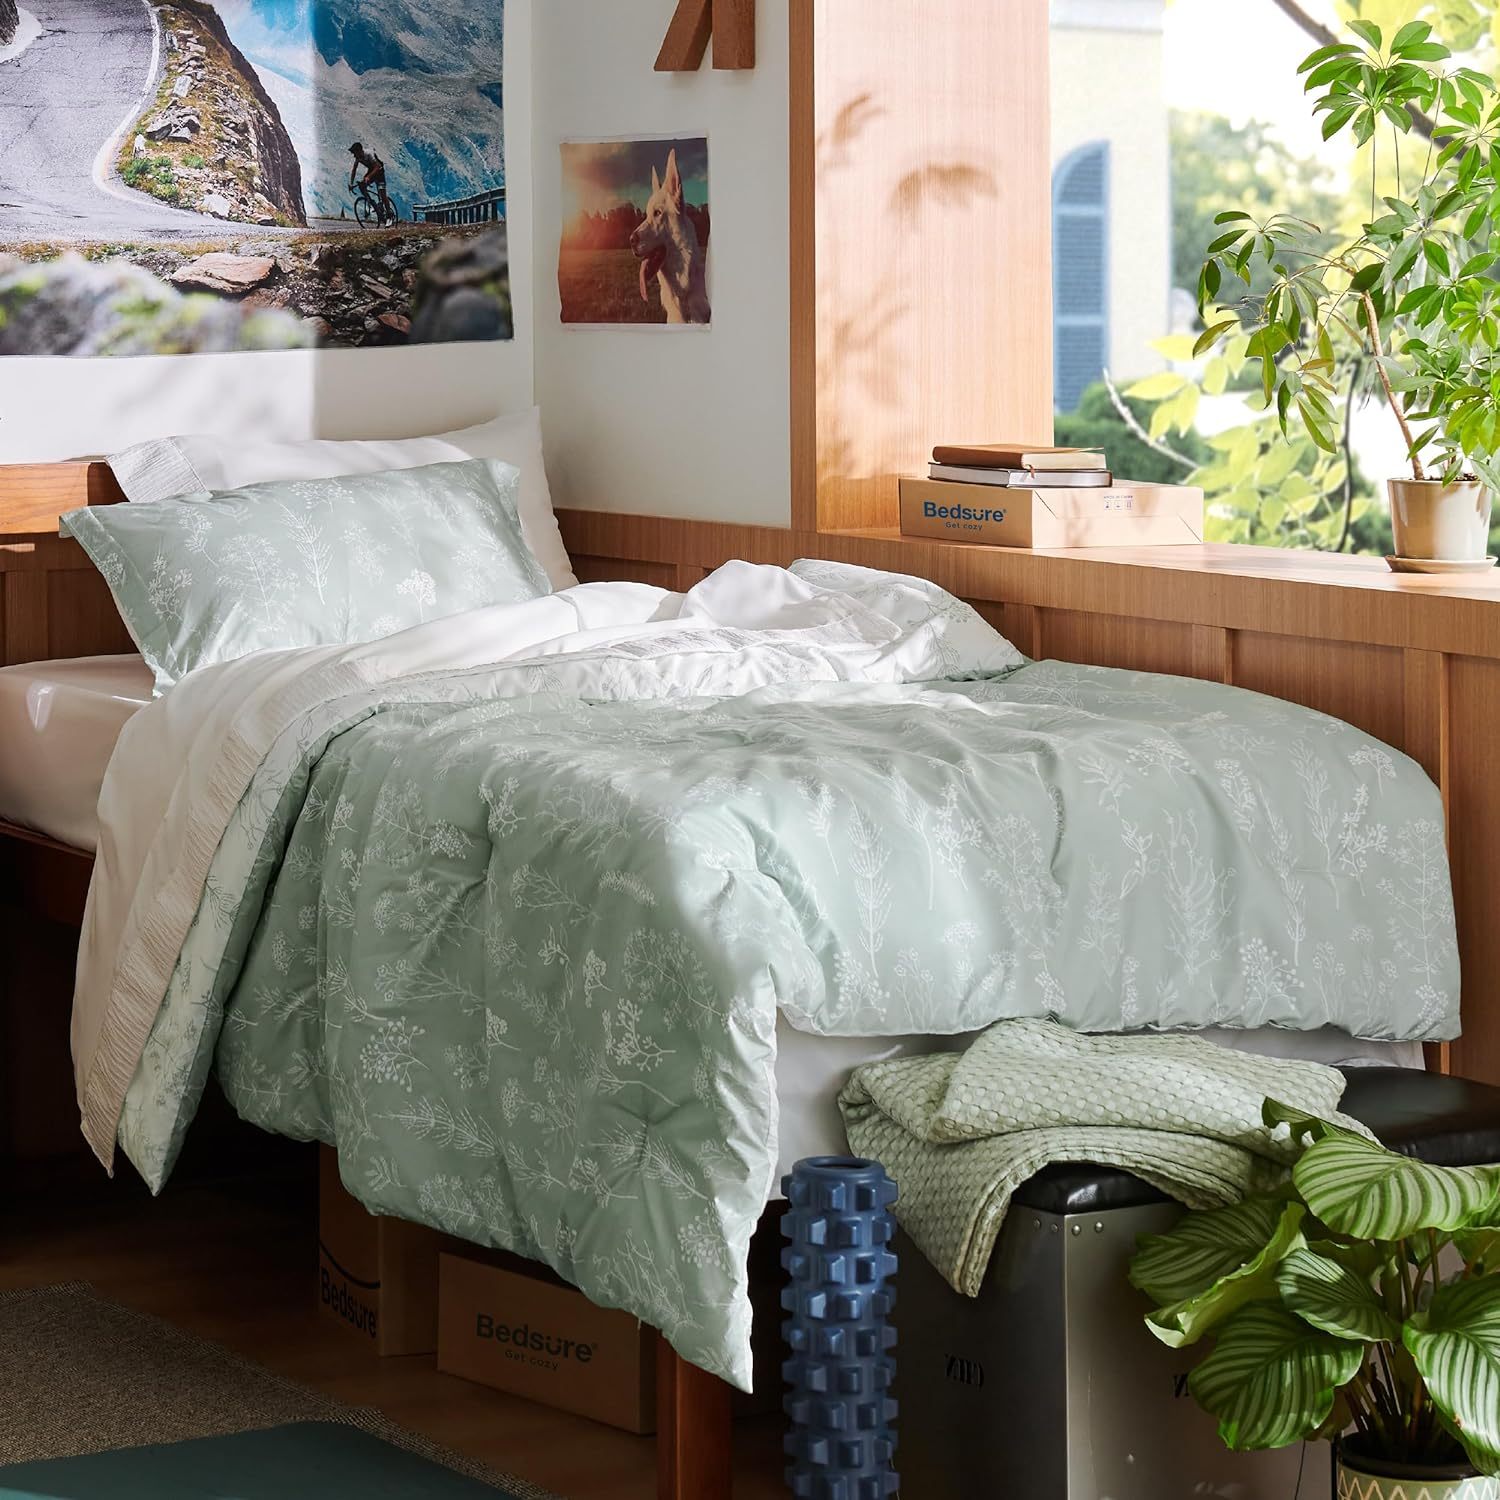 

Bedsure Duvet Cover Set - Reversible Floral Duvet Cover, Bedding Comforter Cover With Zipper Closure & Pillow Sham